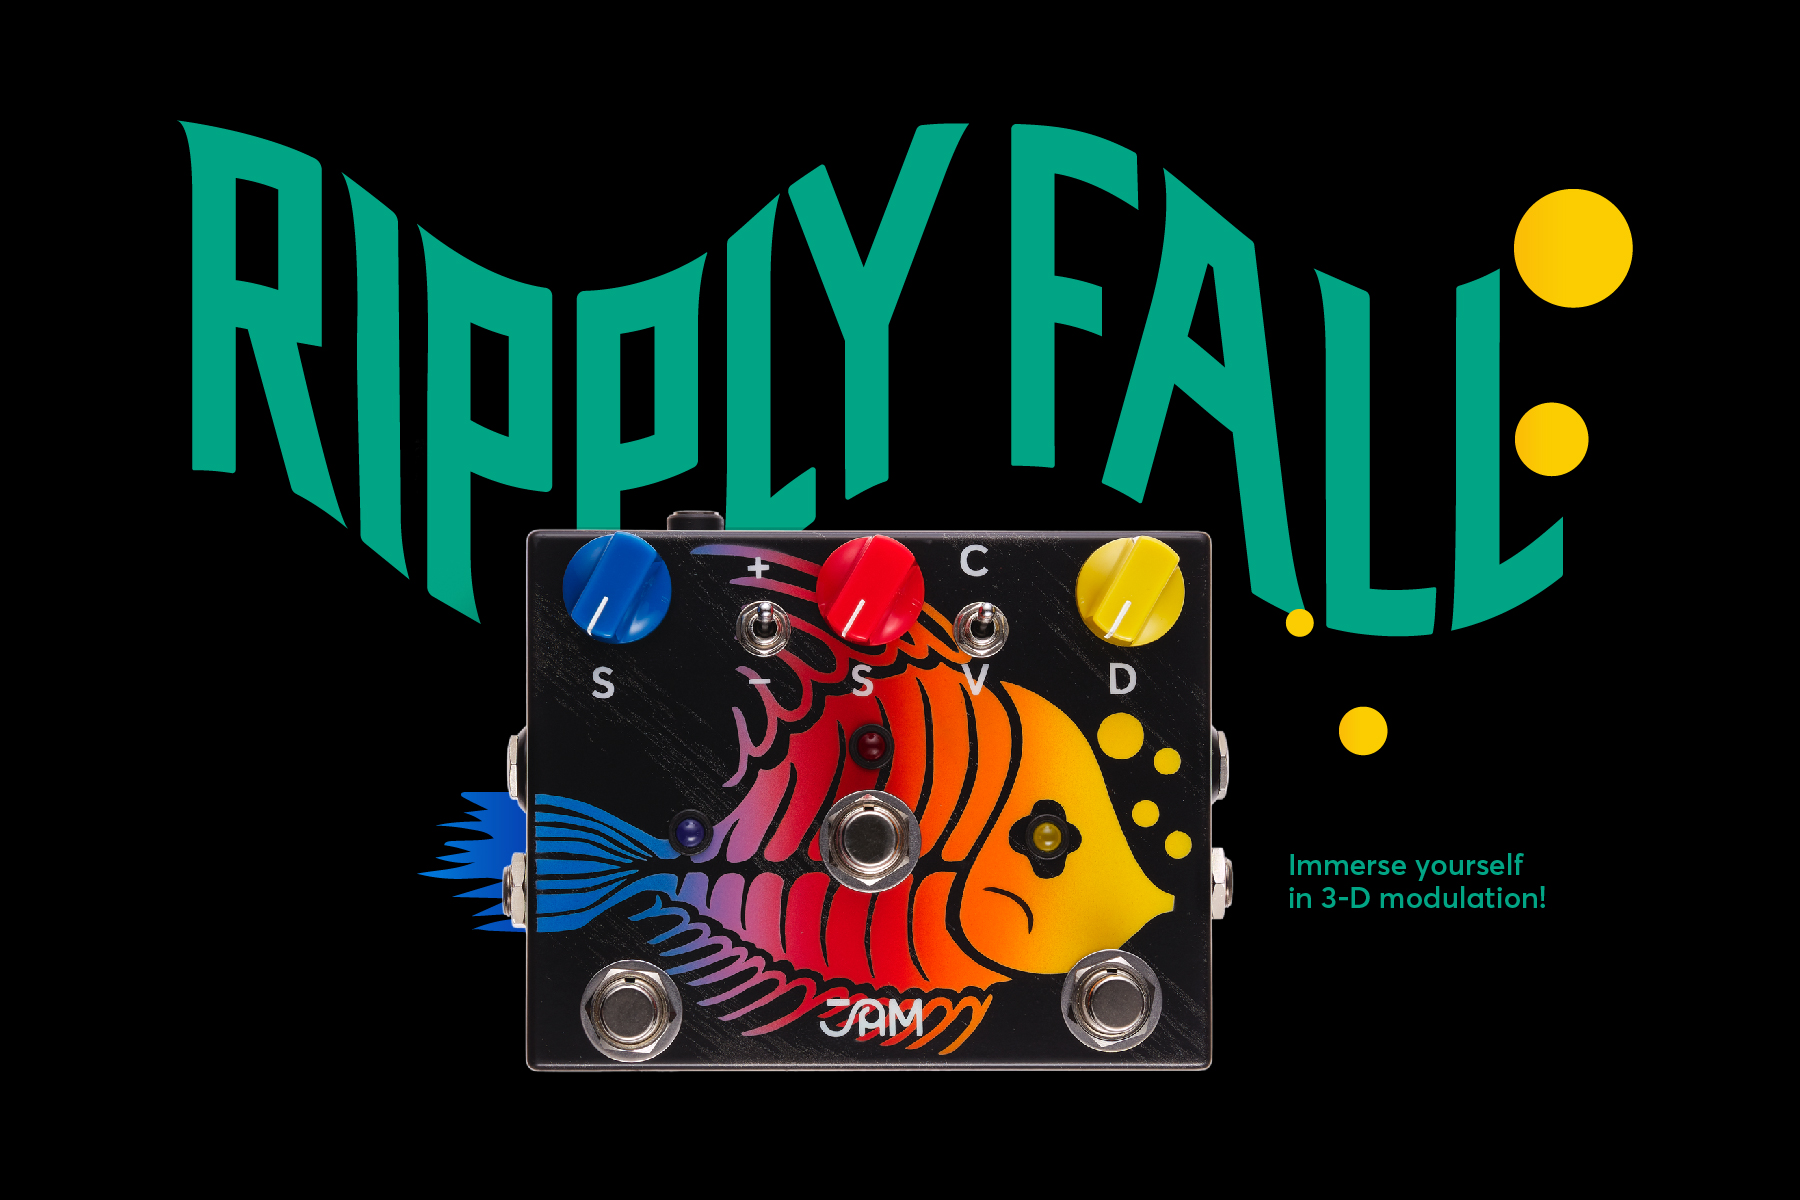 Ripply Fall Bass